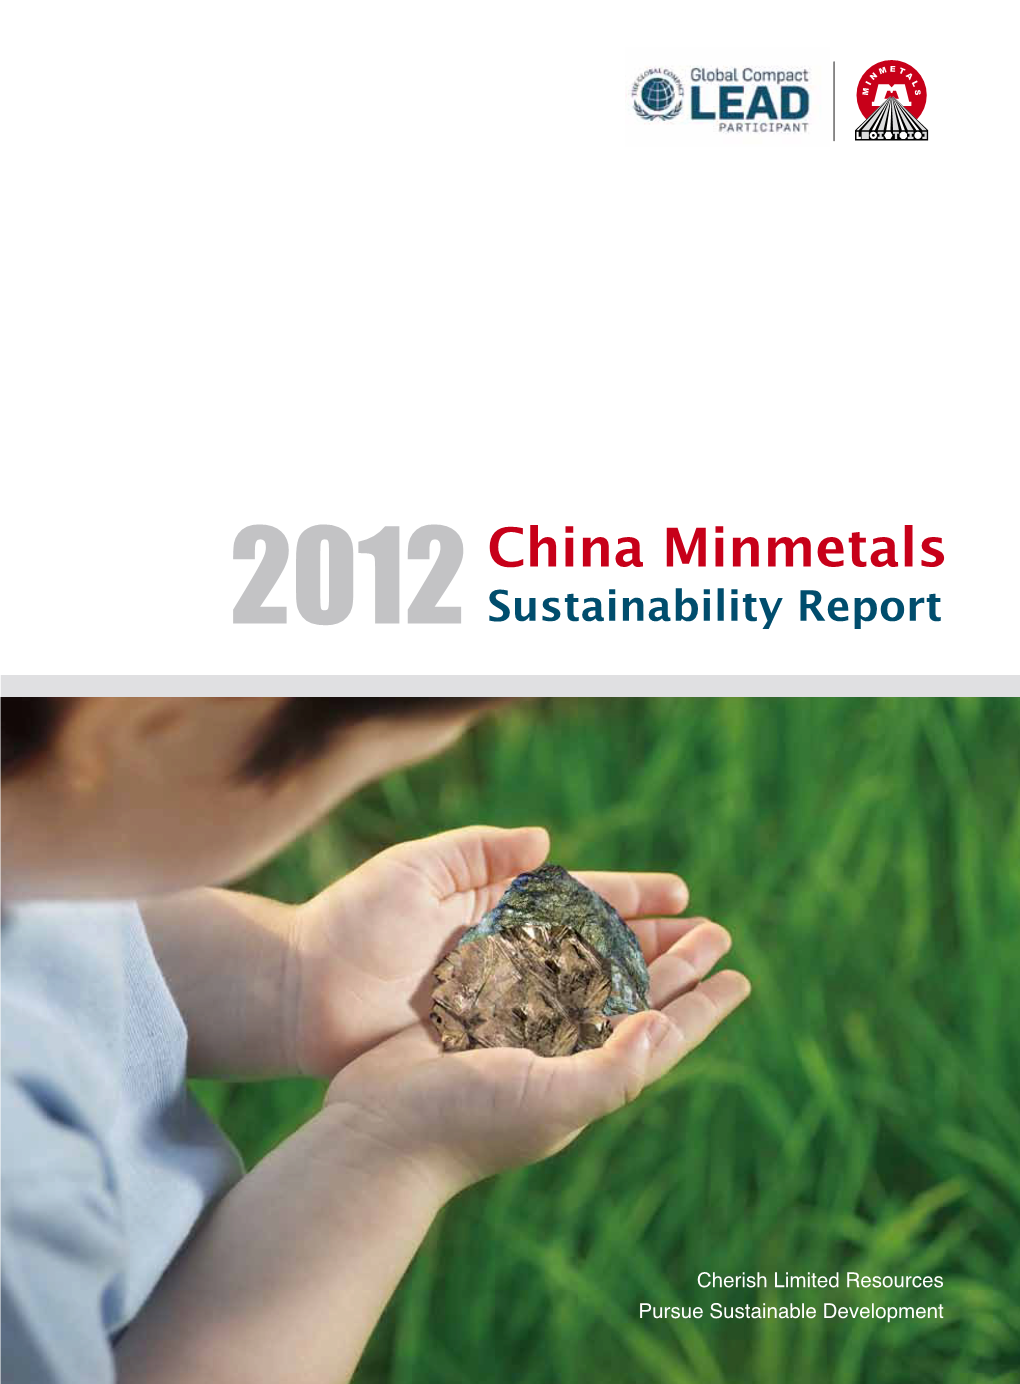 China Minmetals 2012 Sustainability Report Cherish Limited Resources Pursue Sustainable Development 2 012 China Minmetals Sustainability Report